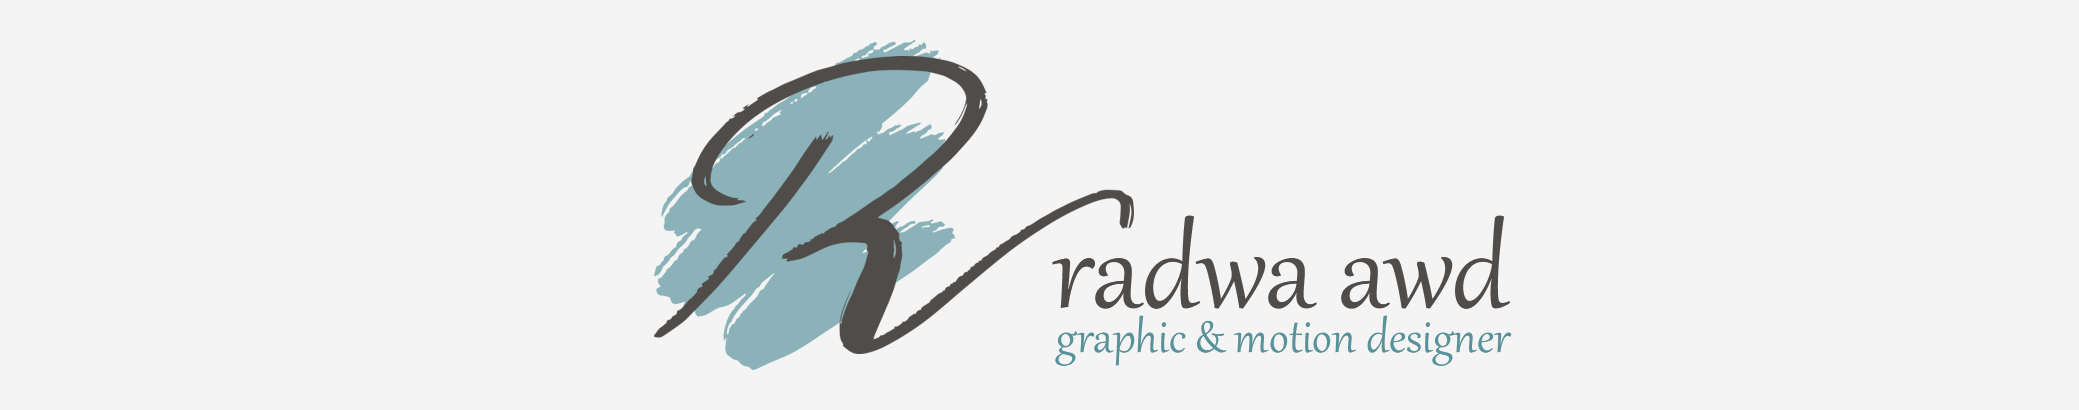 RADWA Awd's profile banner